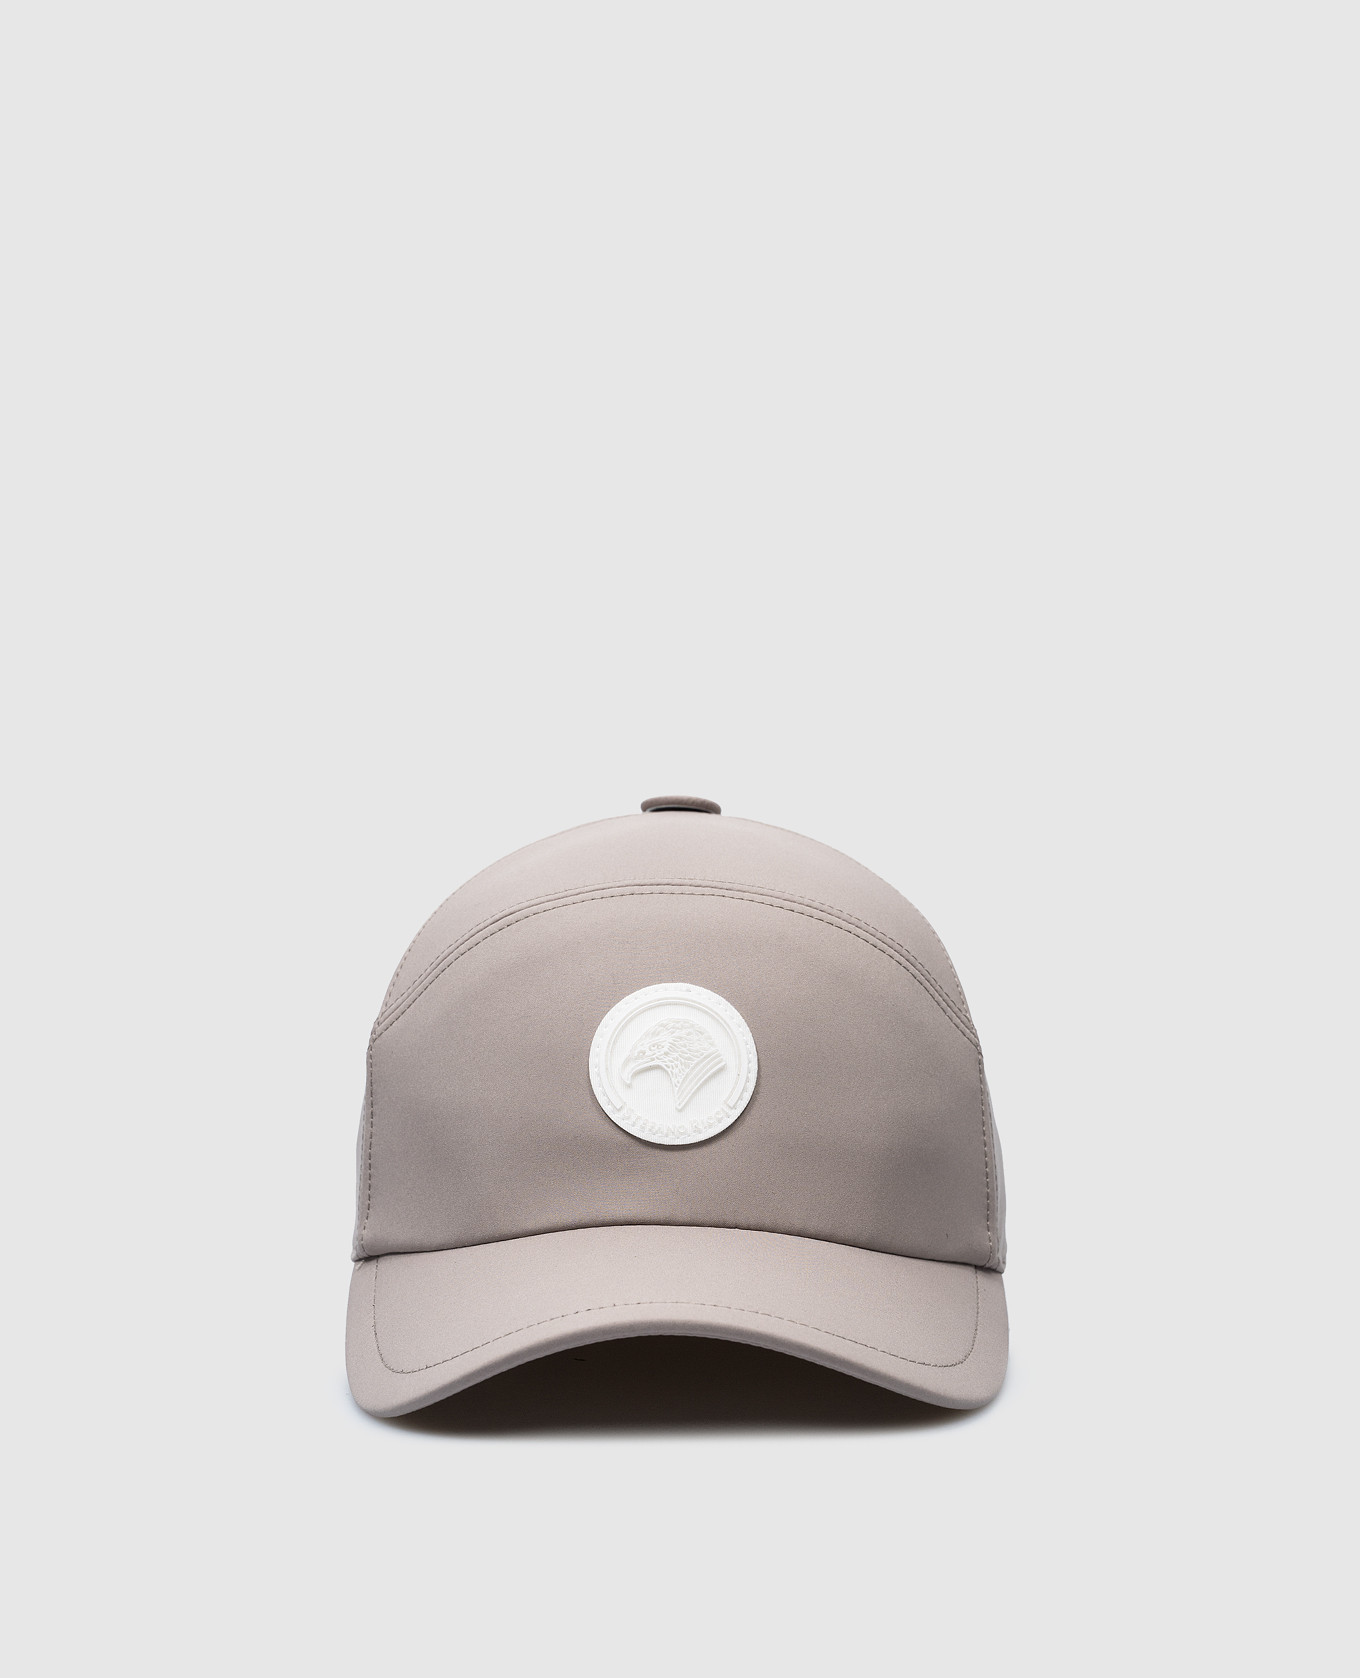 Gray cap with logo emblem